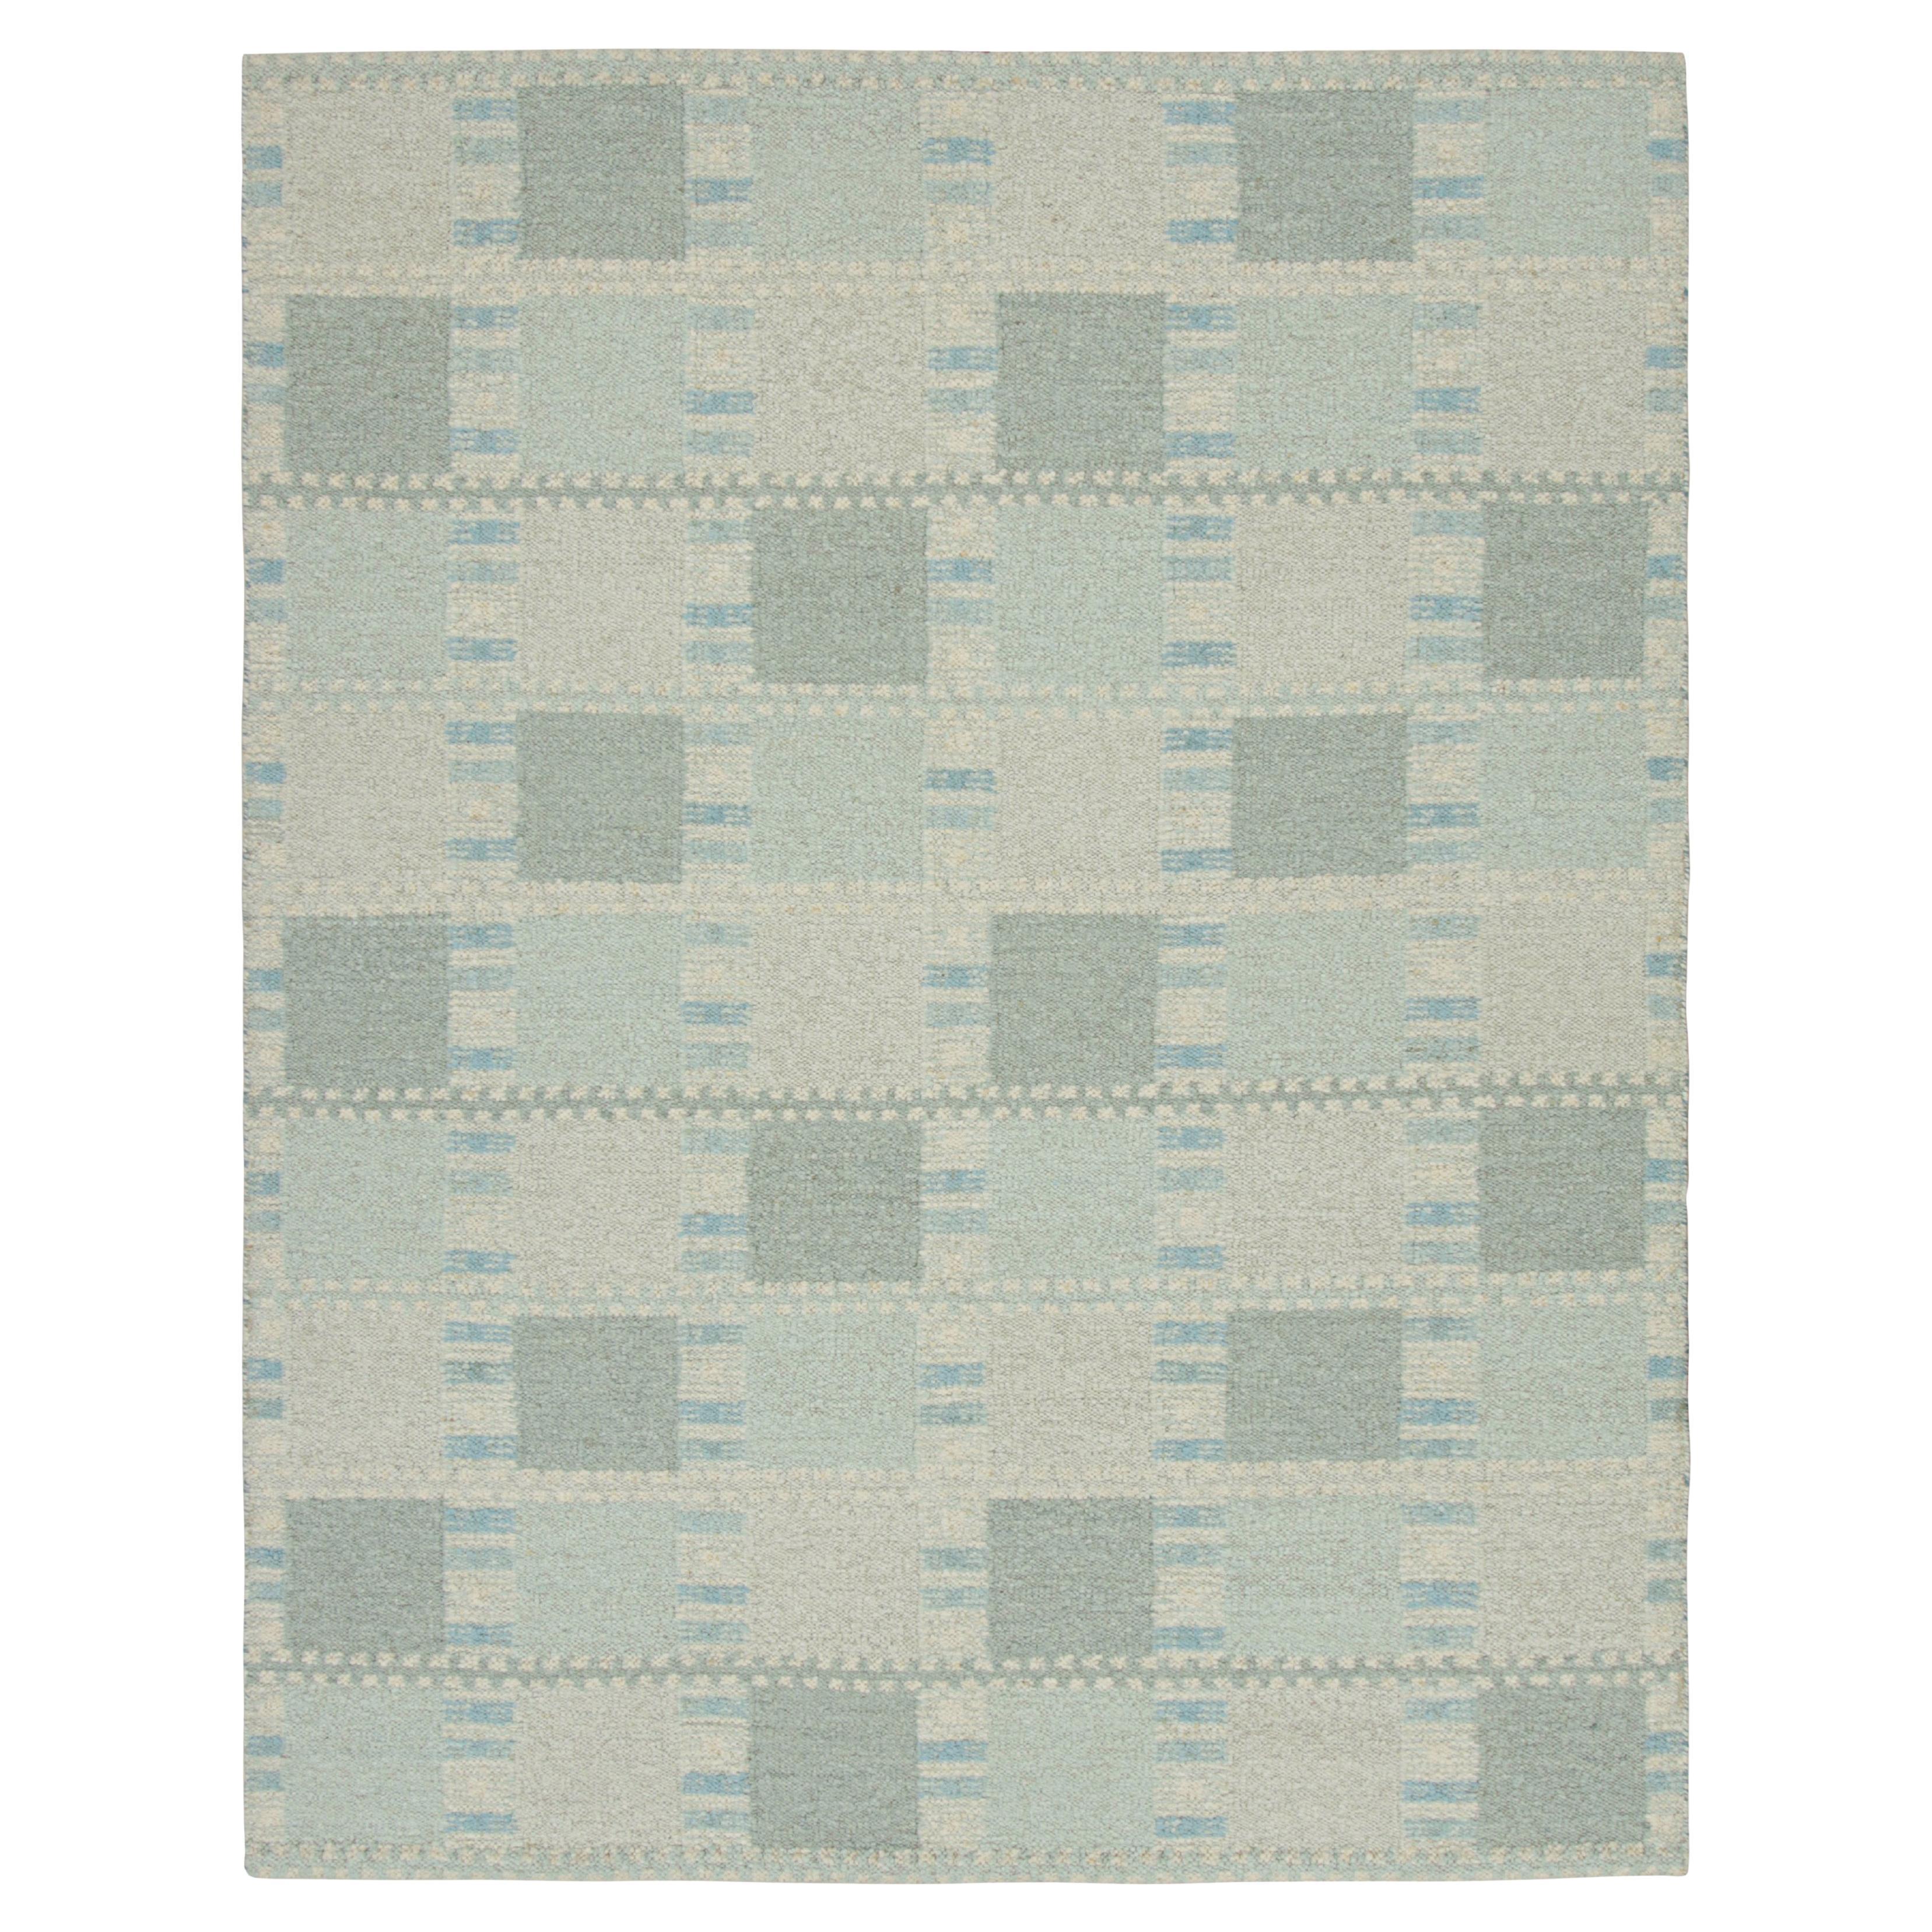 Rug & Kilim’s Scandinavian Style Rug with Light Blue Geometric Patterns